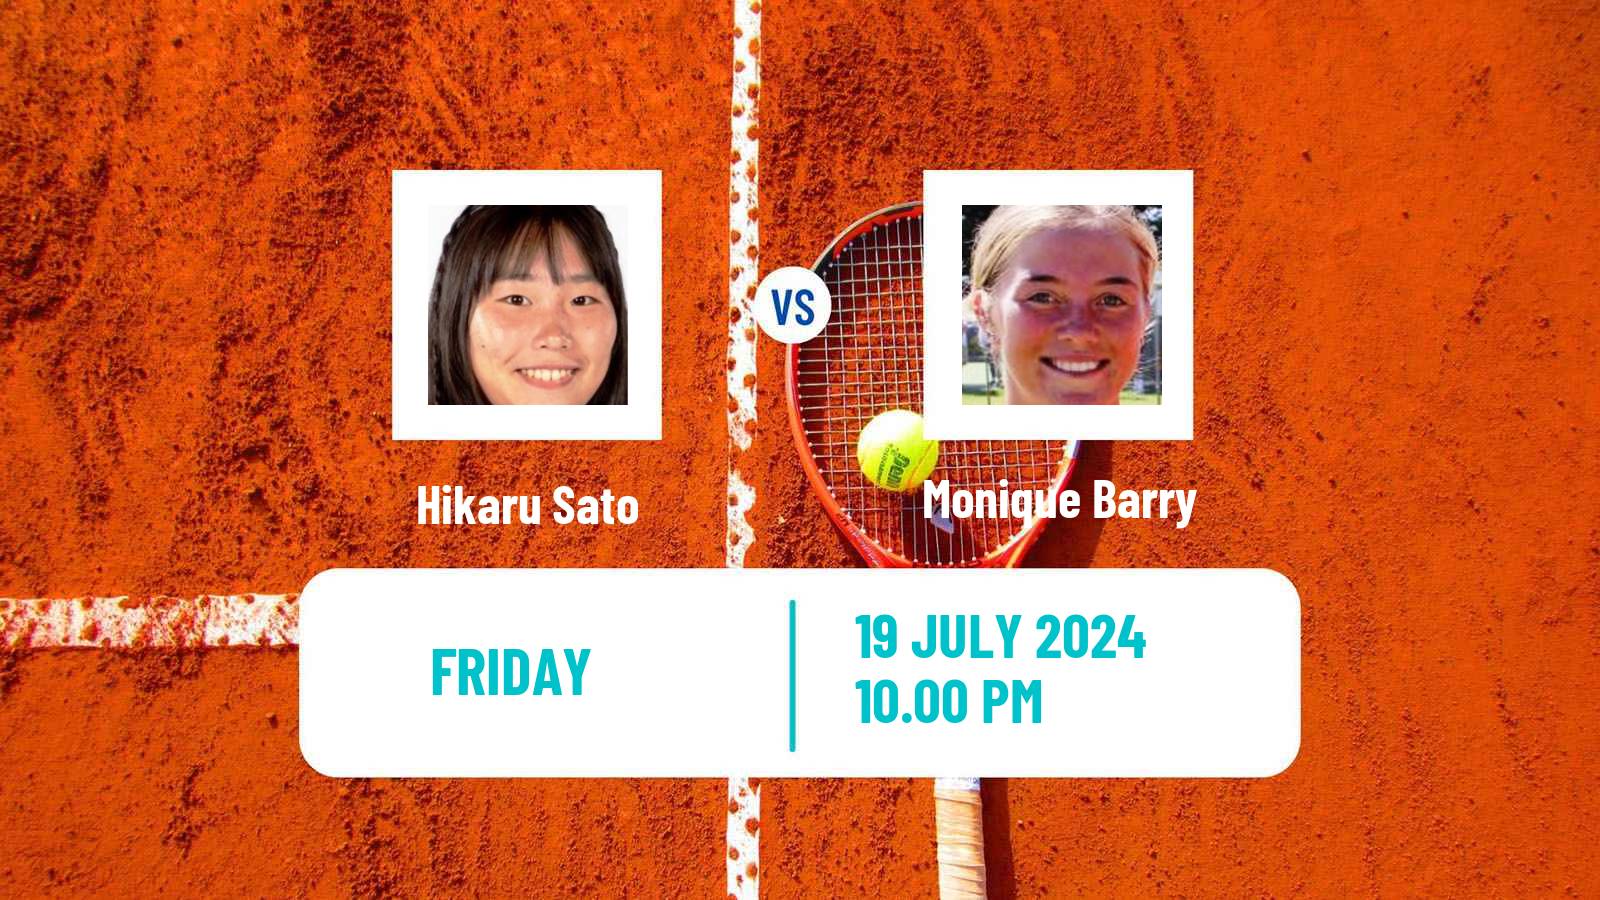 Tennis ITF W15 Nakhon Si Thammarat 4 Women Hikaru Sato - Monique Barry